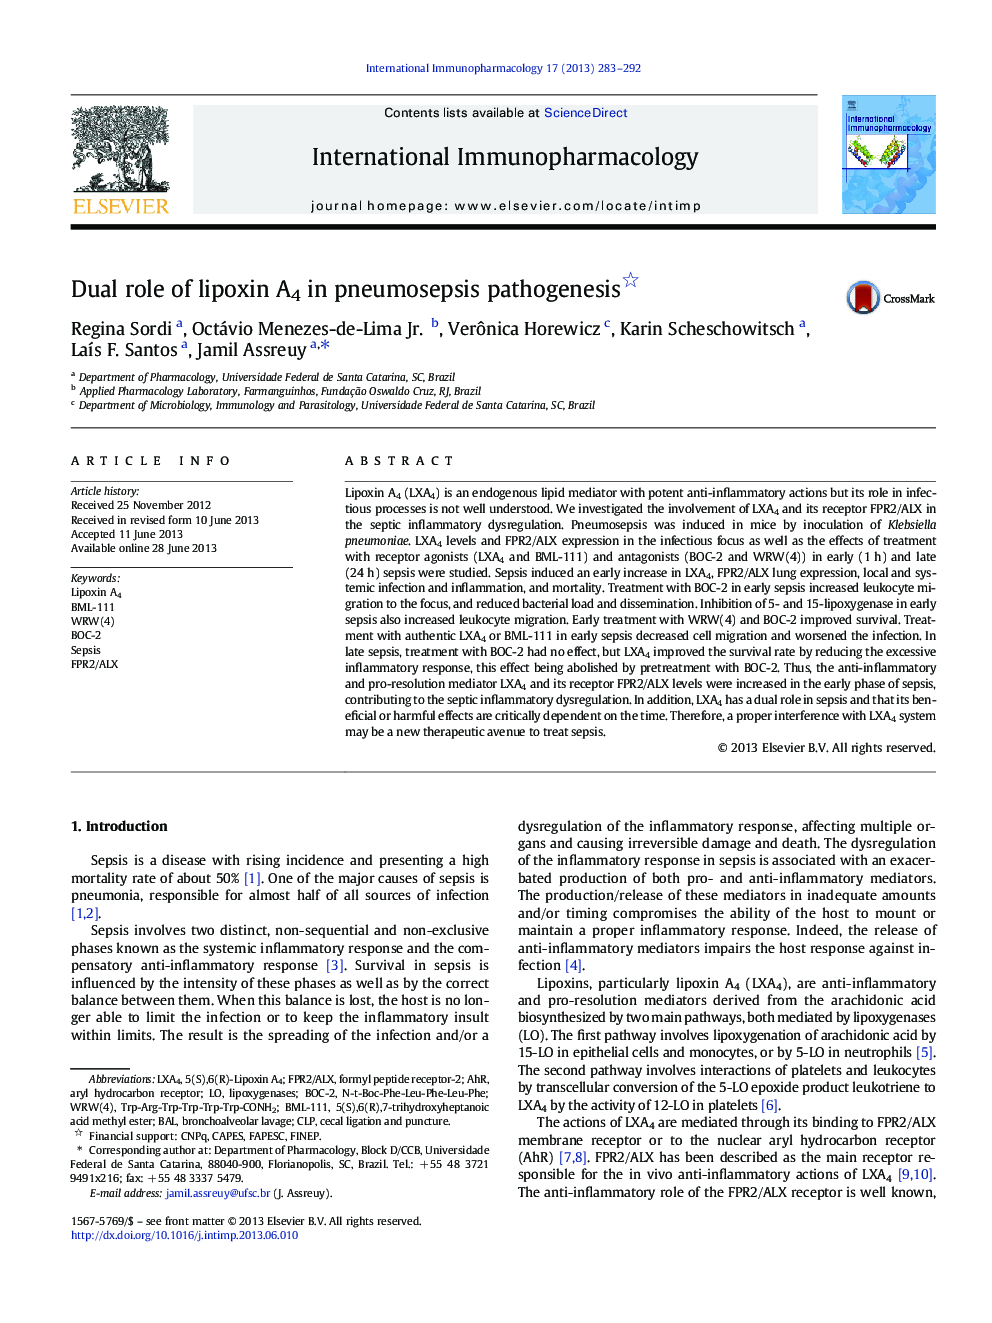 Dual role of lipoxin A4 in pneumosepsis pathogenesis